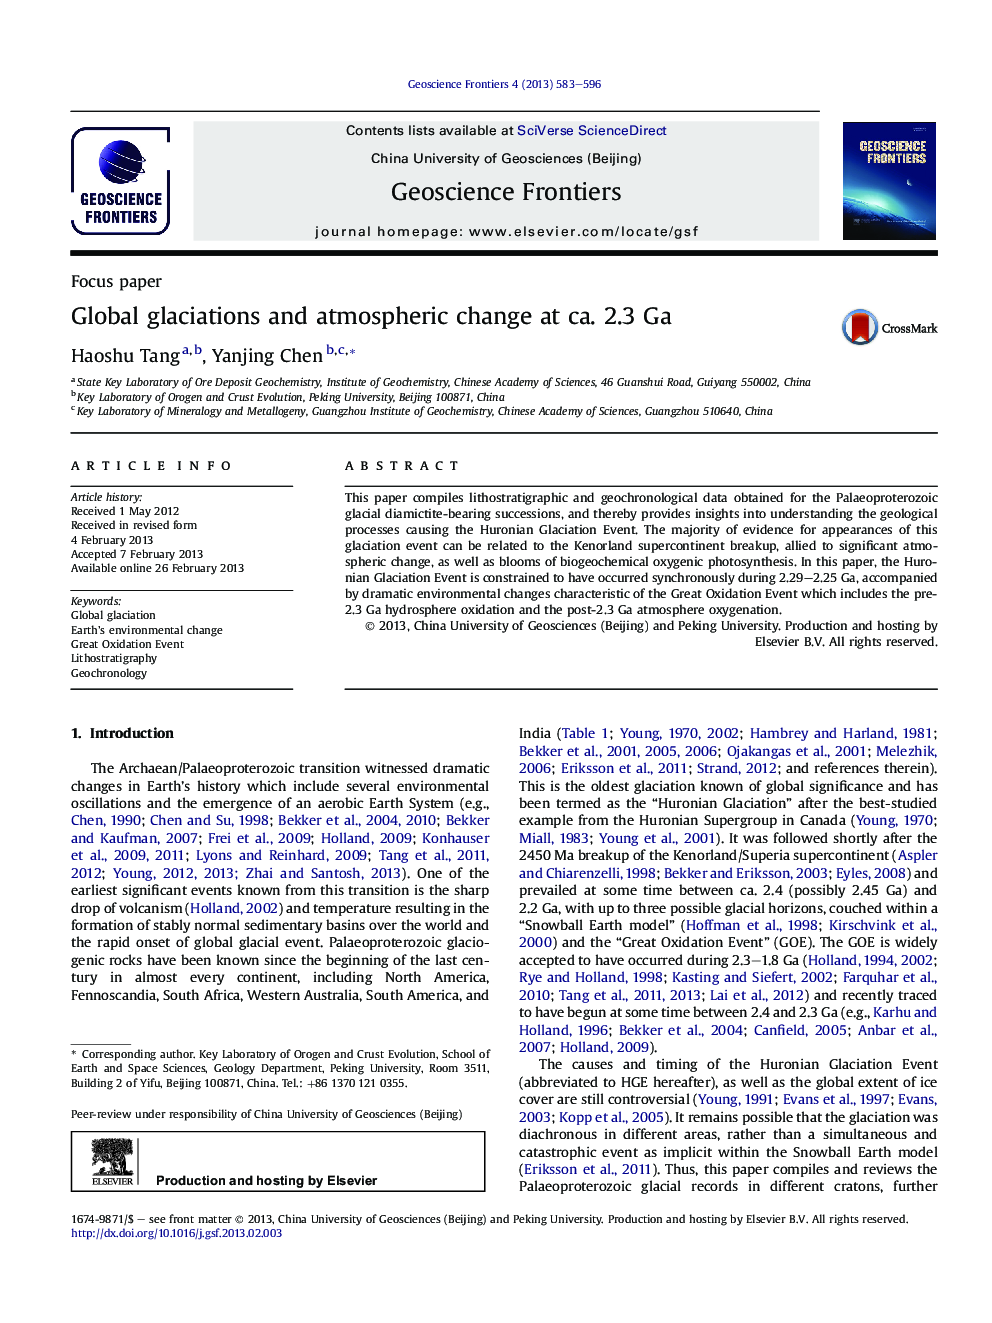 Global glaciations and atmospheric change at ca. 2.3 Ga 